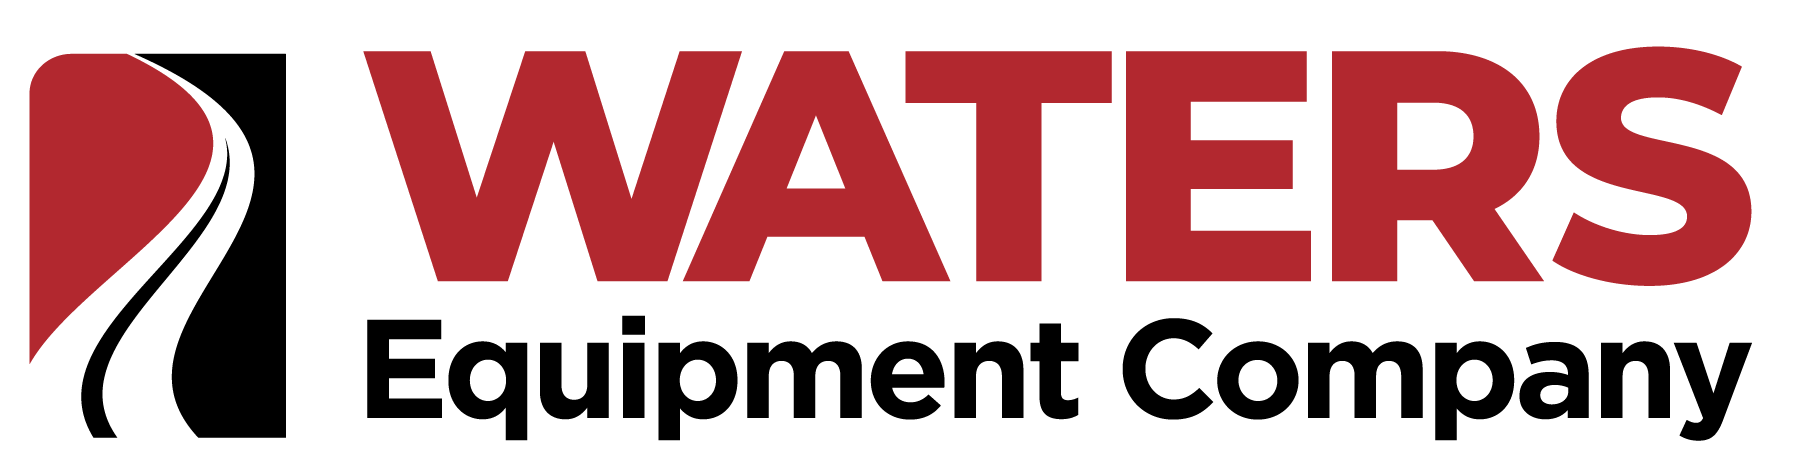 Waters Equipment Company